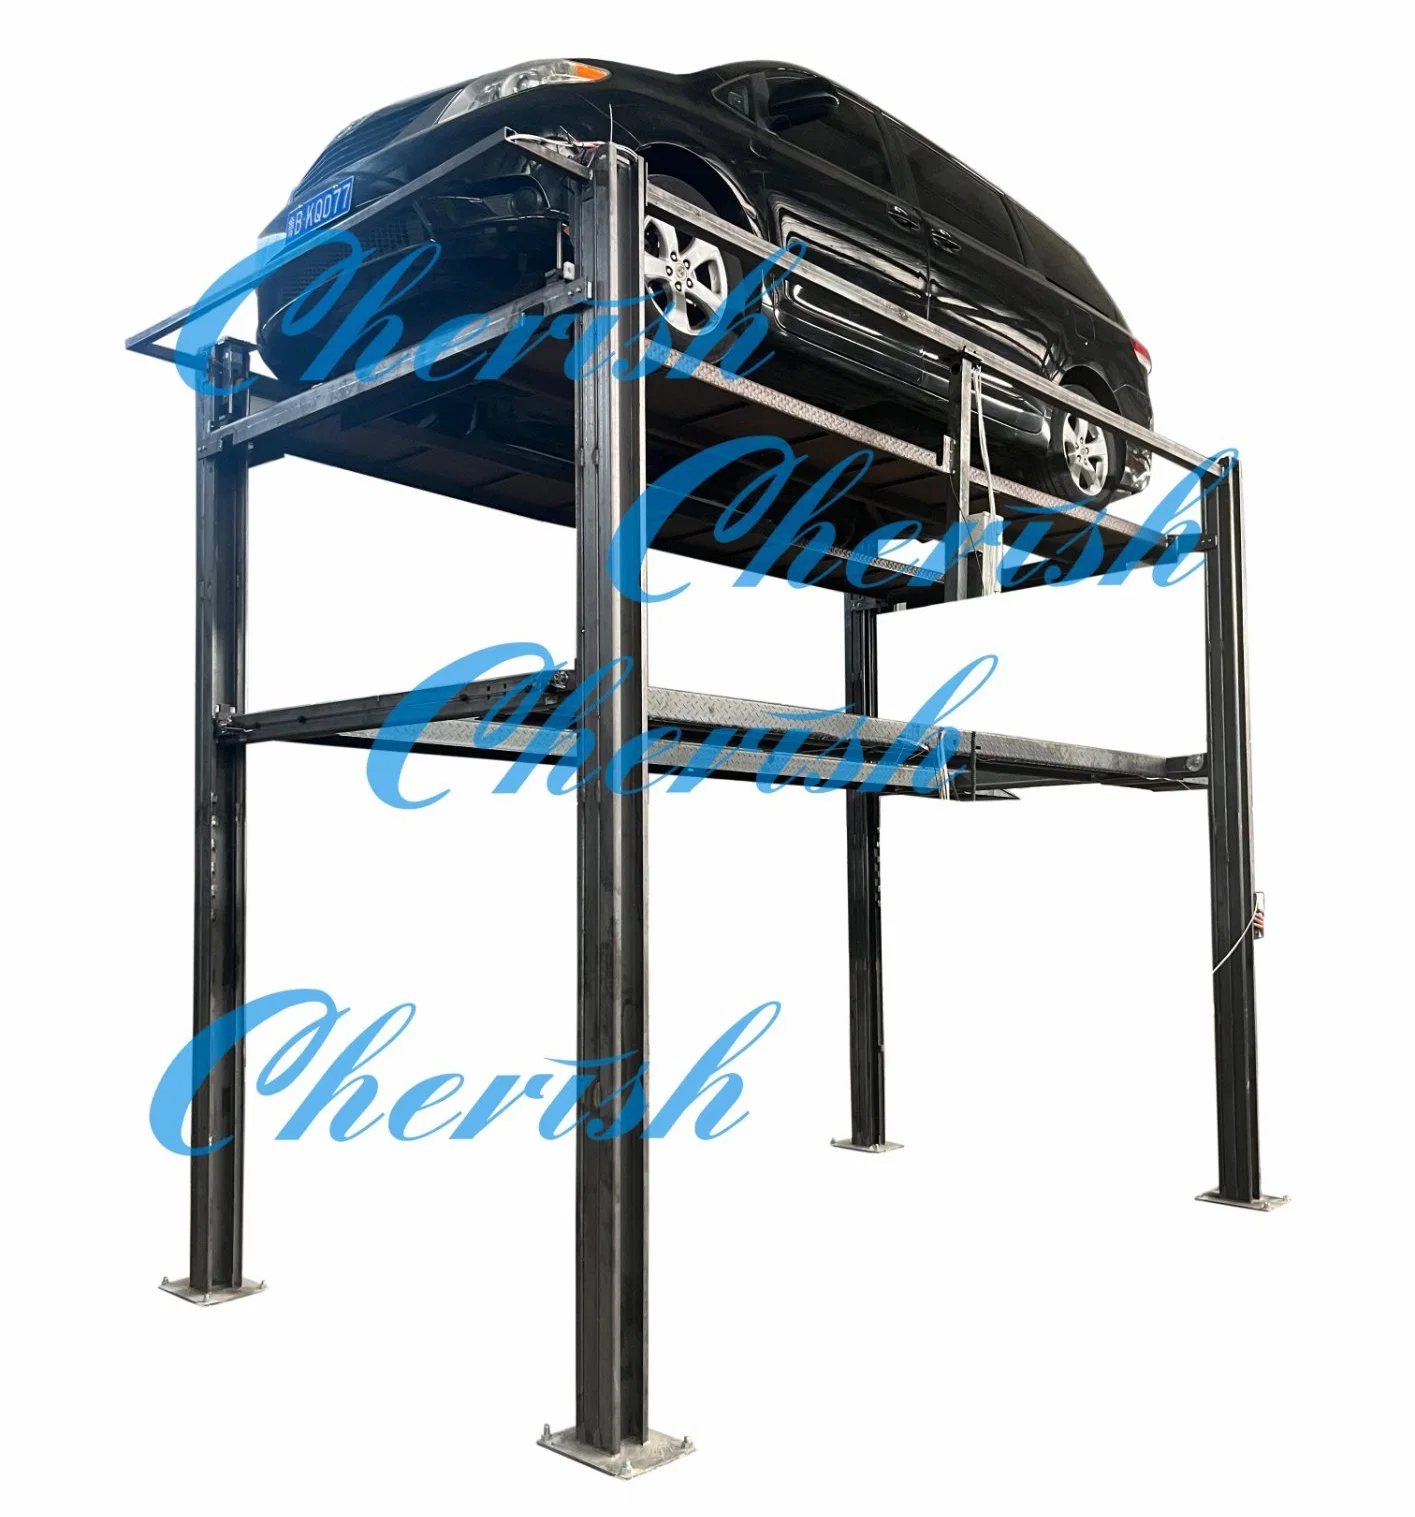 Home Garage Triple Stacker Parking Lift Vehicle Lift Hydraulic Parking Equipment